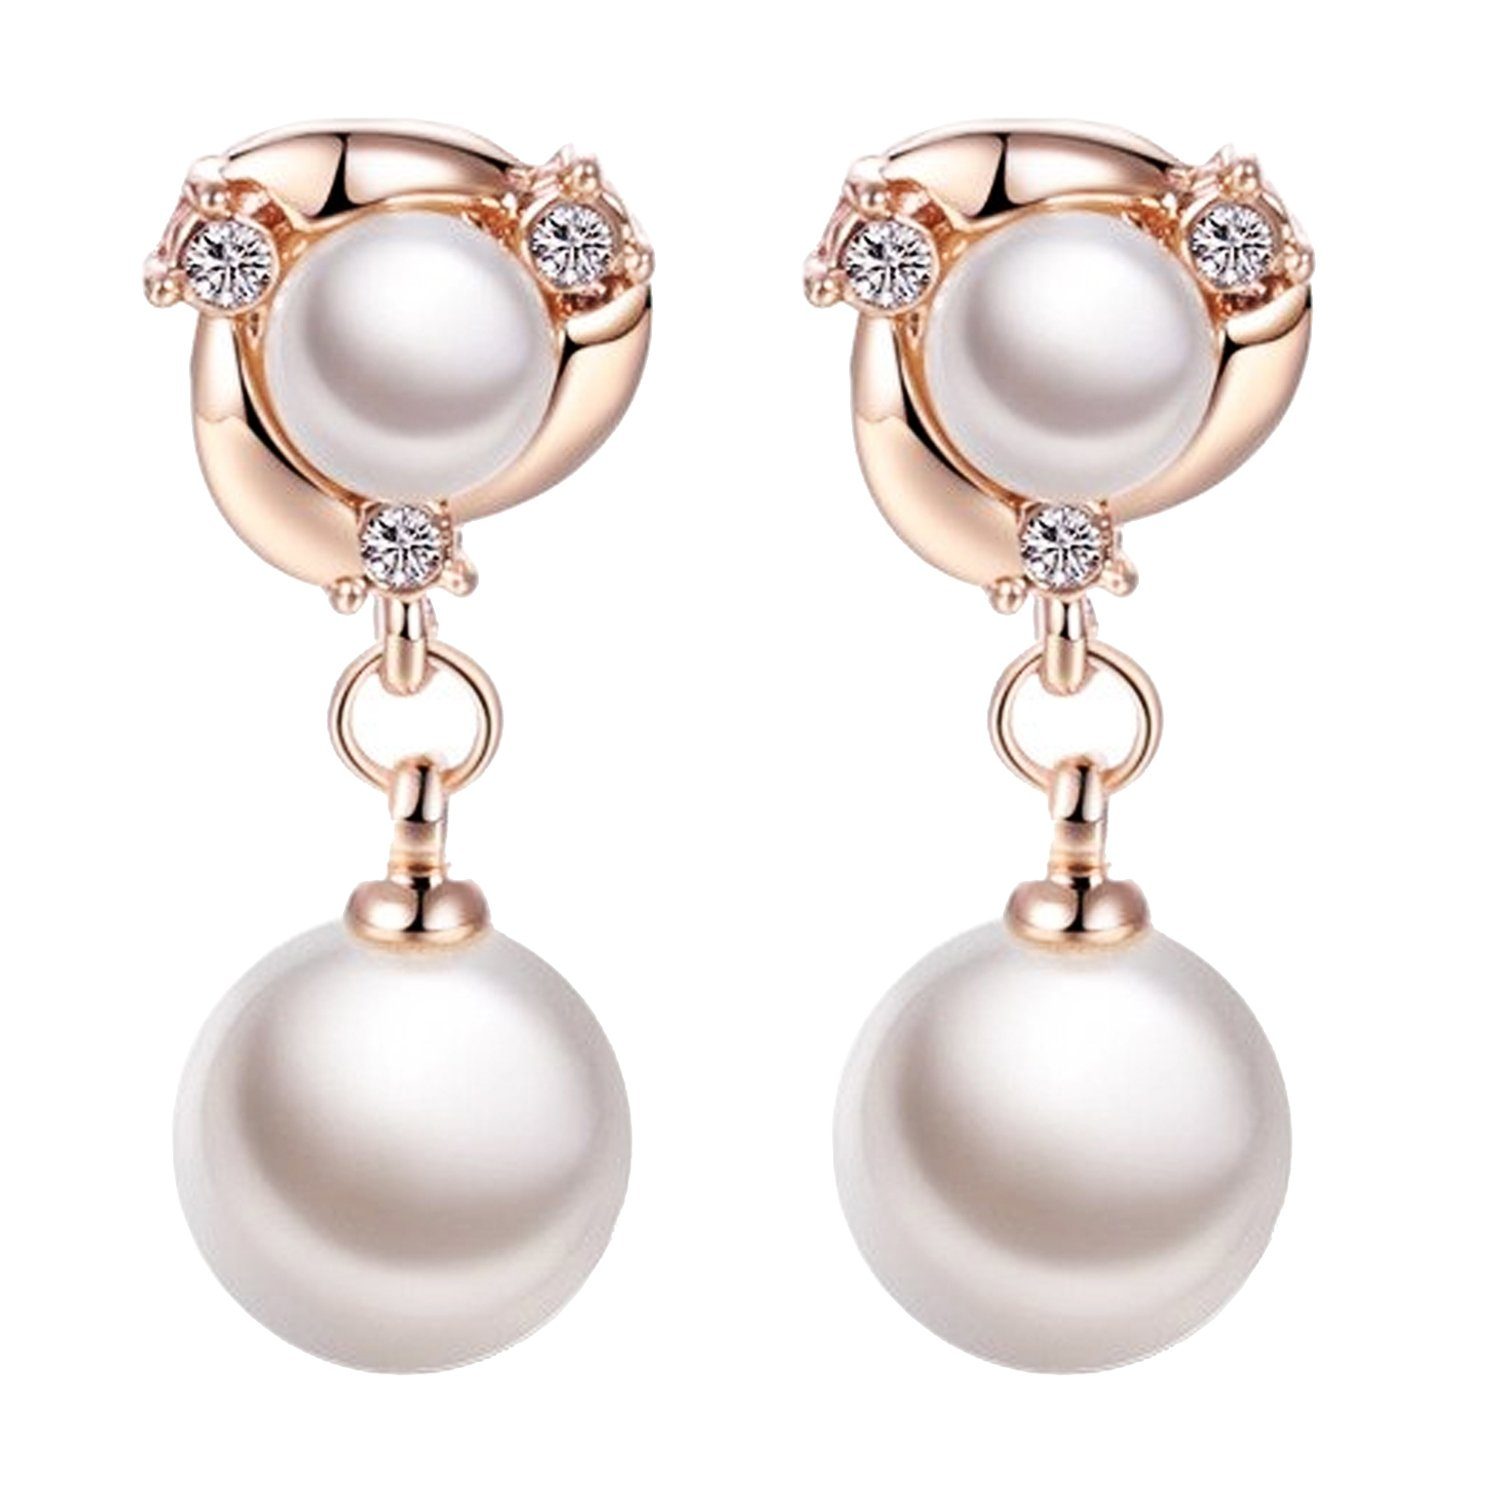 Zierliche s\u00fc\u00dfe Asymmetrische Cream Rechteck vergoldete Ohrringe mit dekorativen Perlen Schmuck Ohrringe Perlenohrringe 